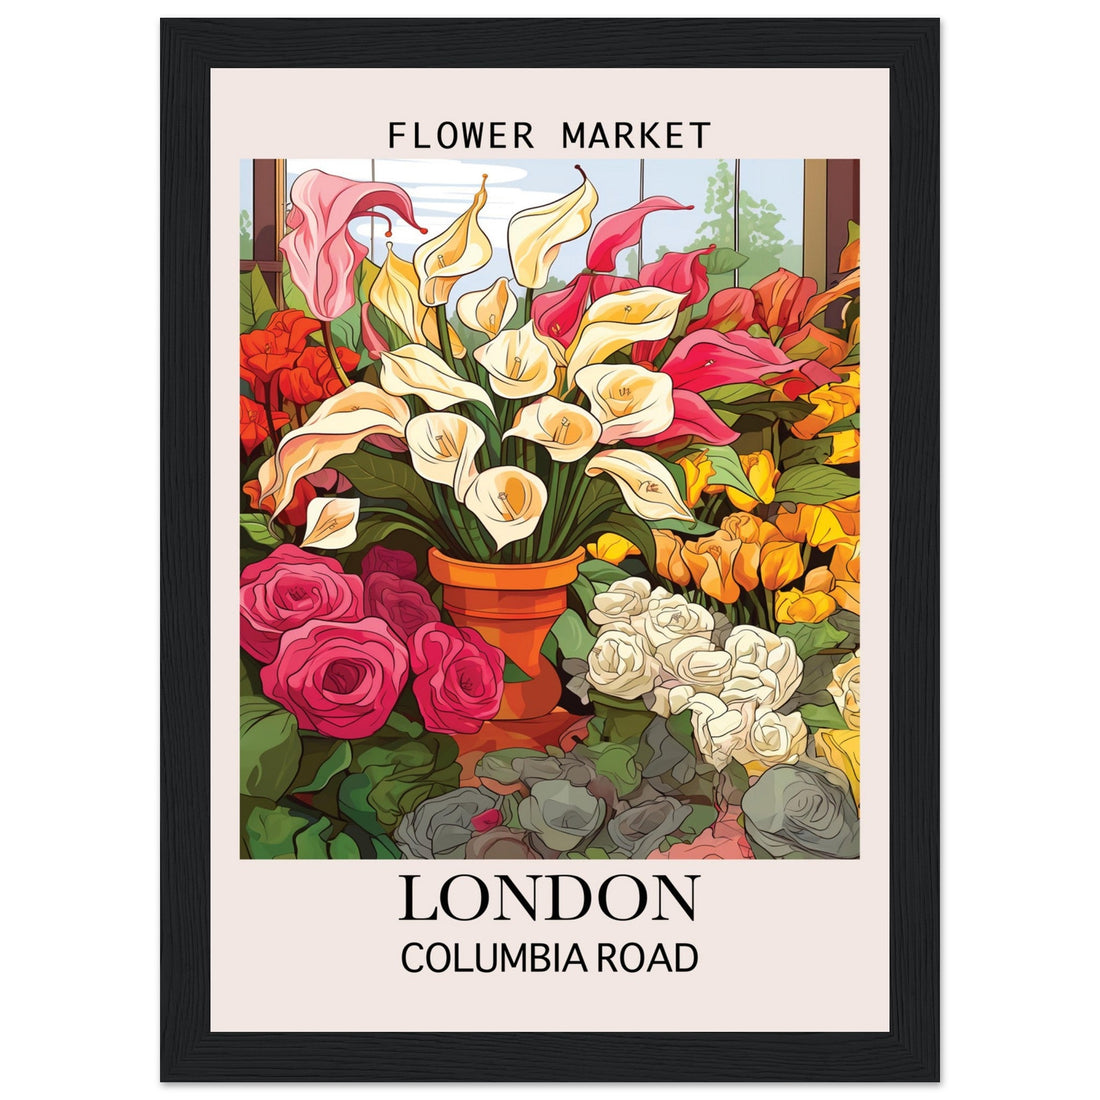 Flower Market Print, London - Framed Poster, Columbia Road, Flower Market, London, #illieeart